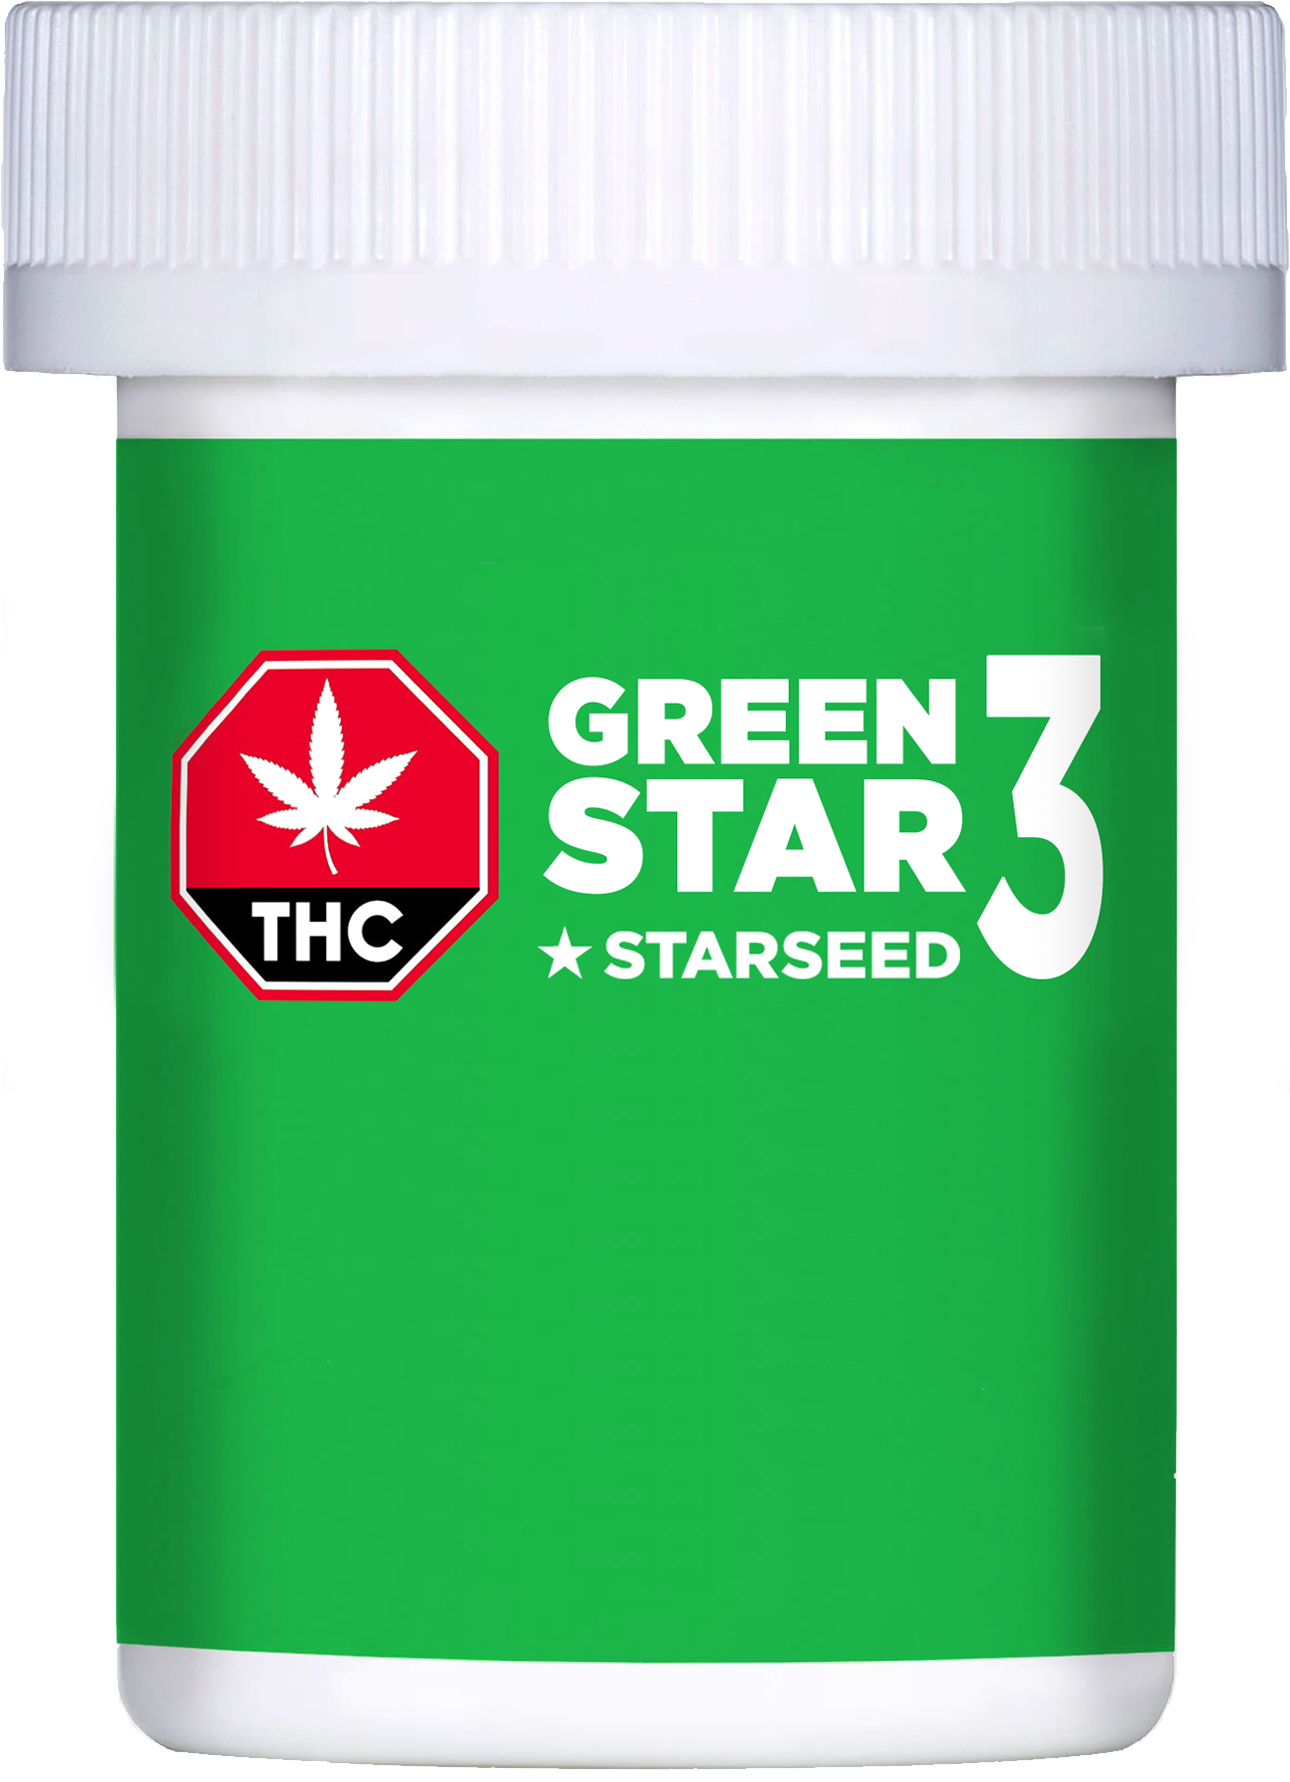 Starseed Green Star 3